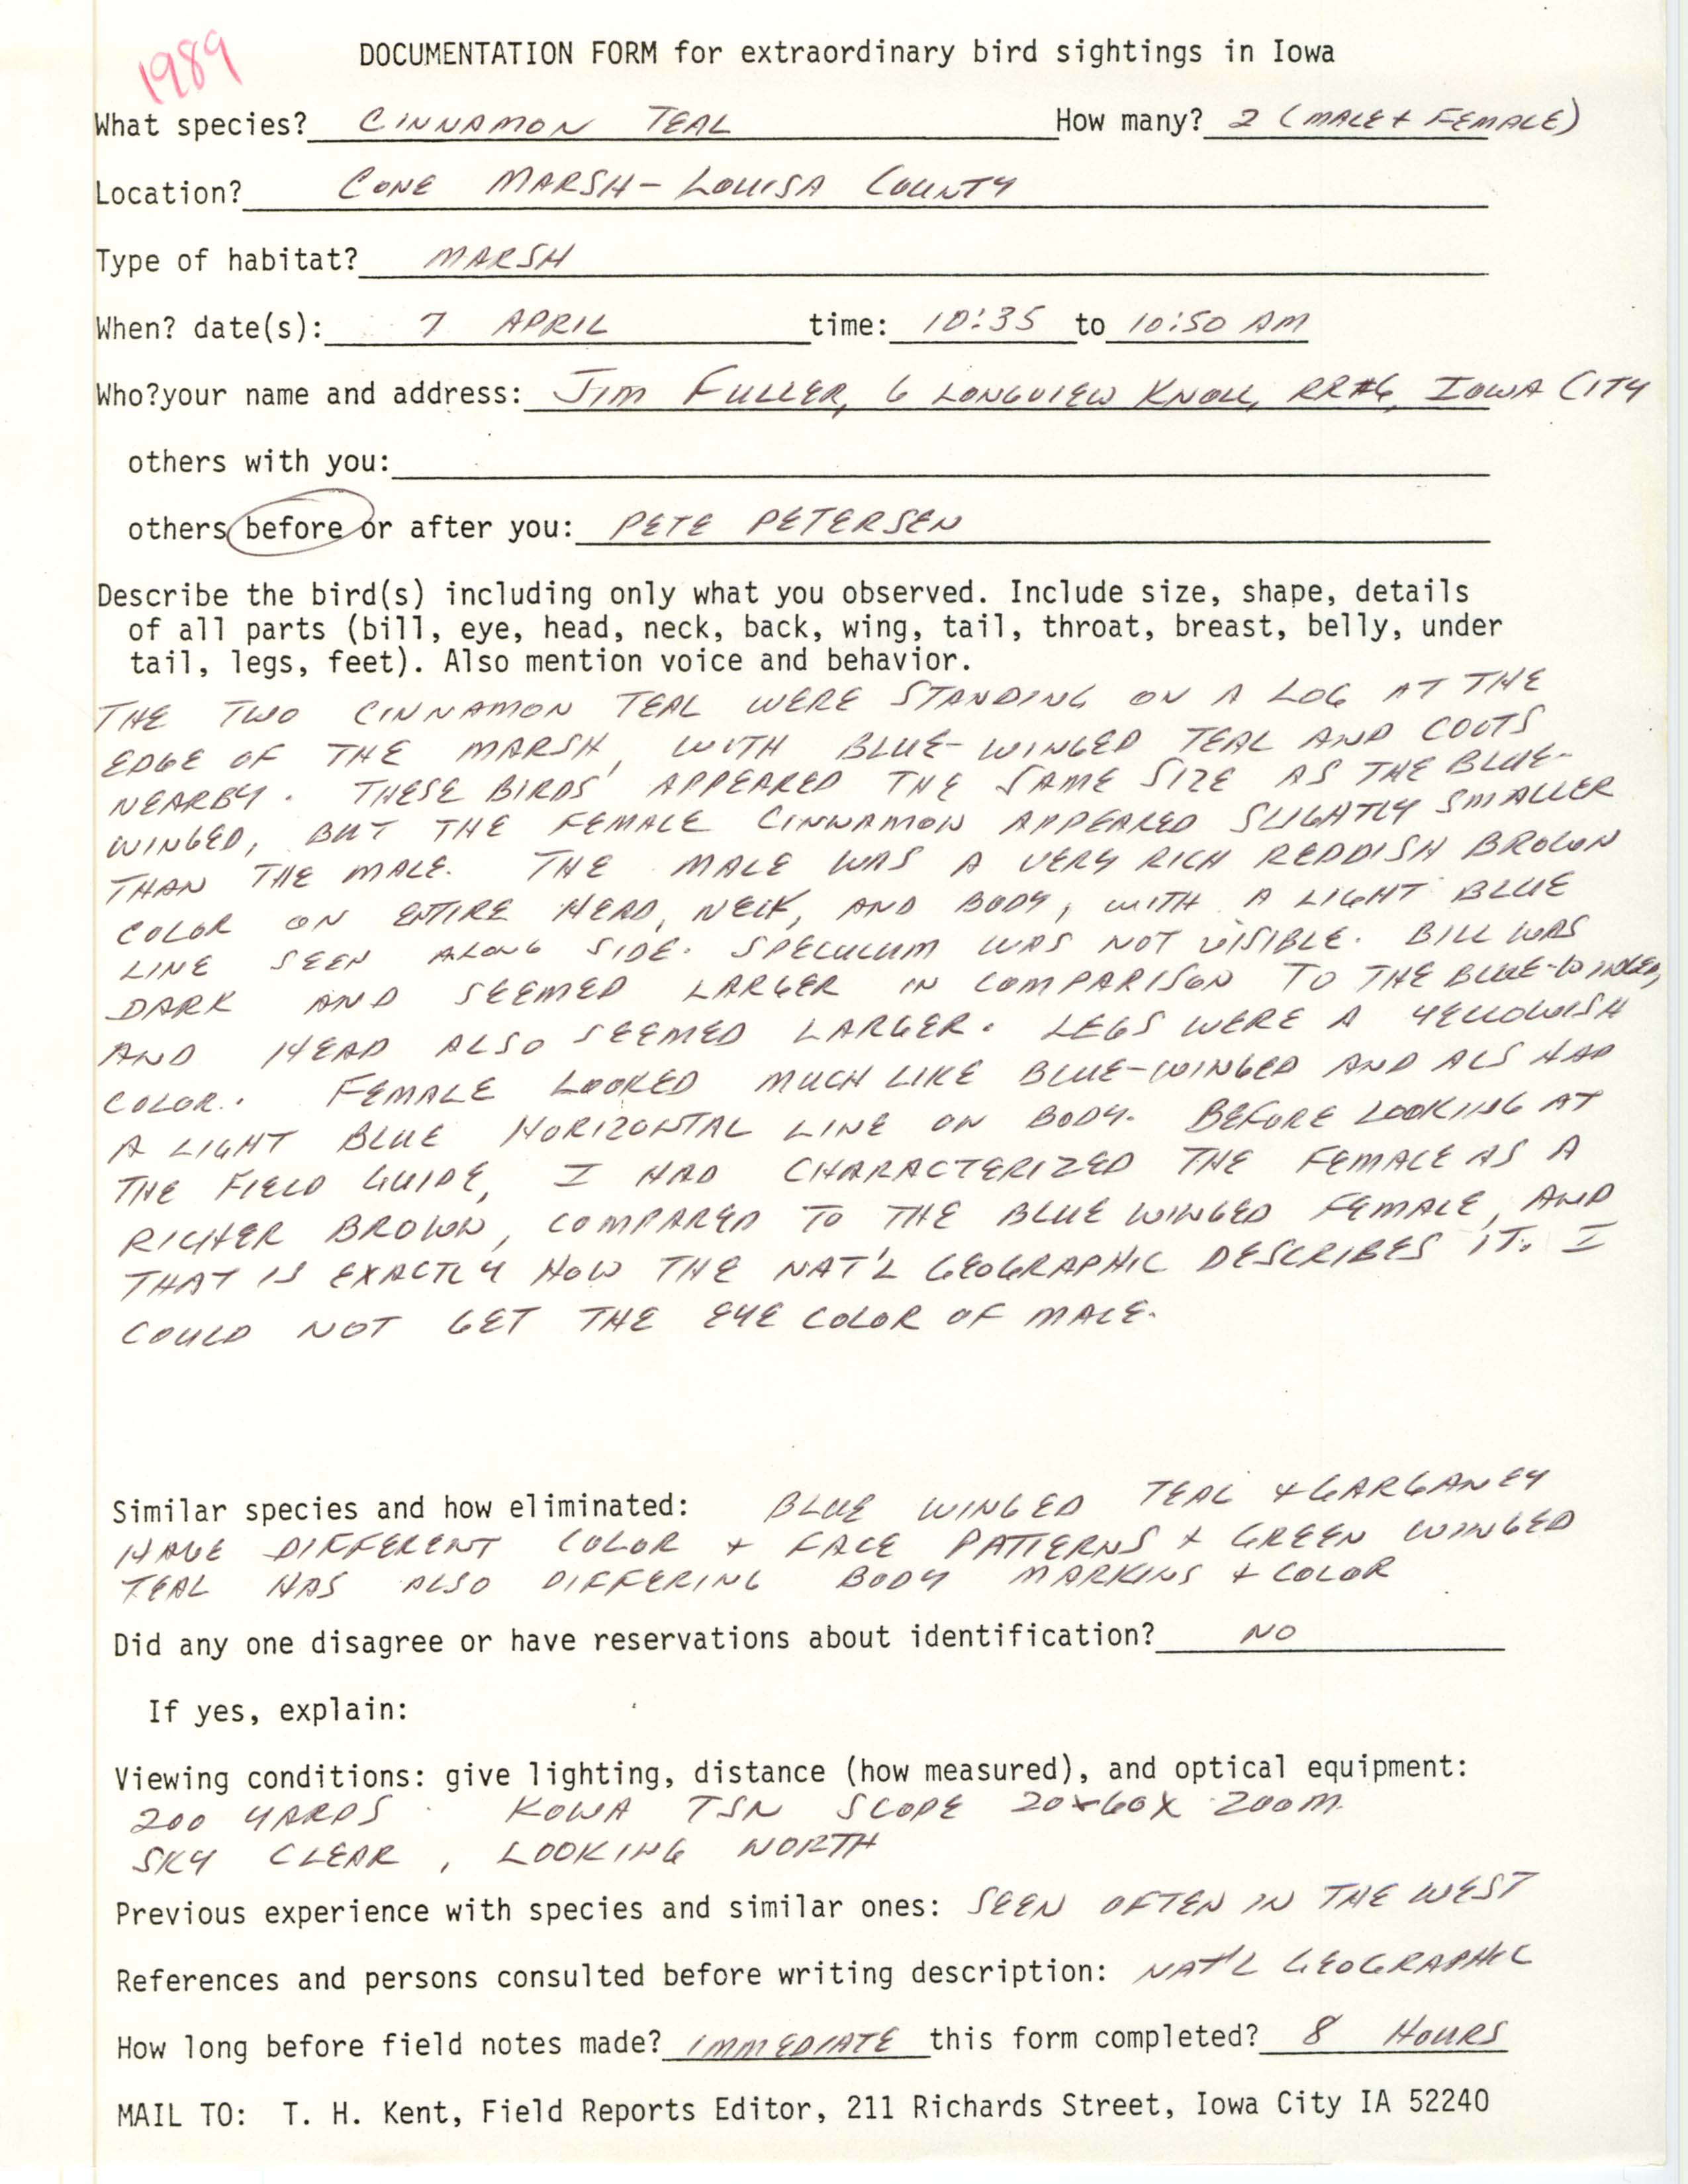 Rare bird documentation form for Cinnamon Teal at Cone Marsh, 1989